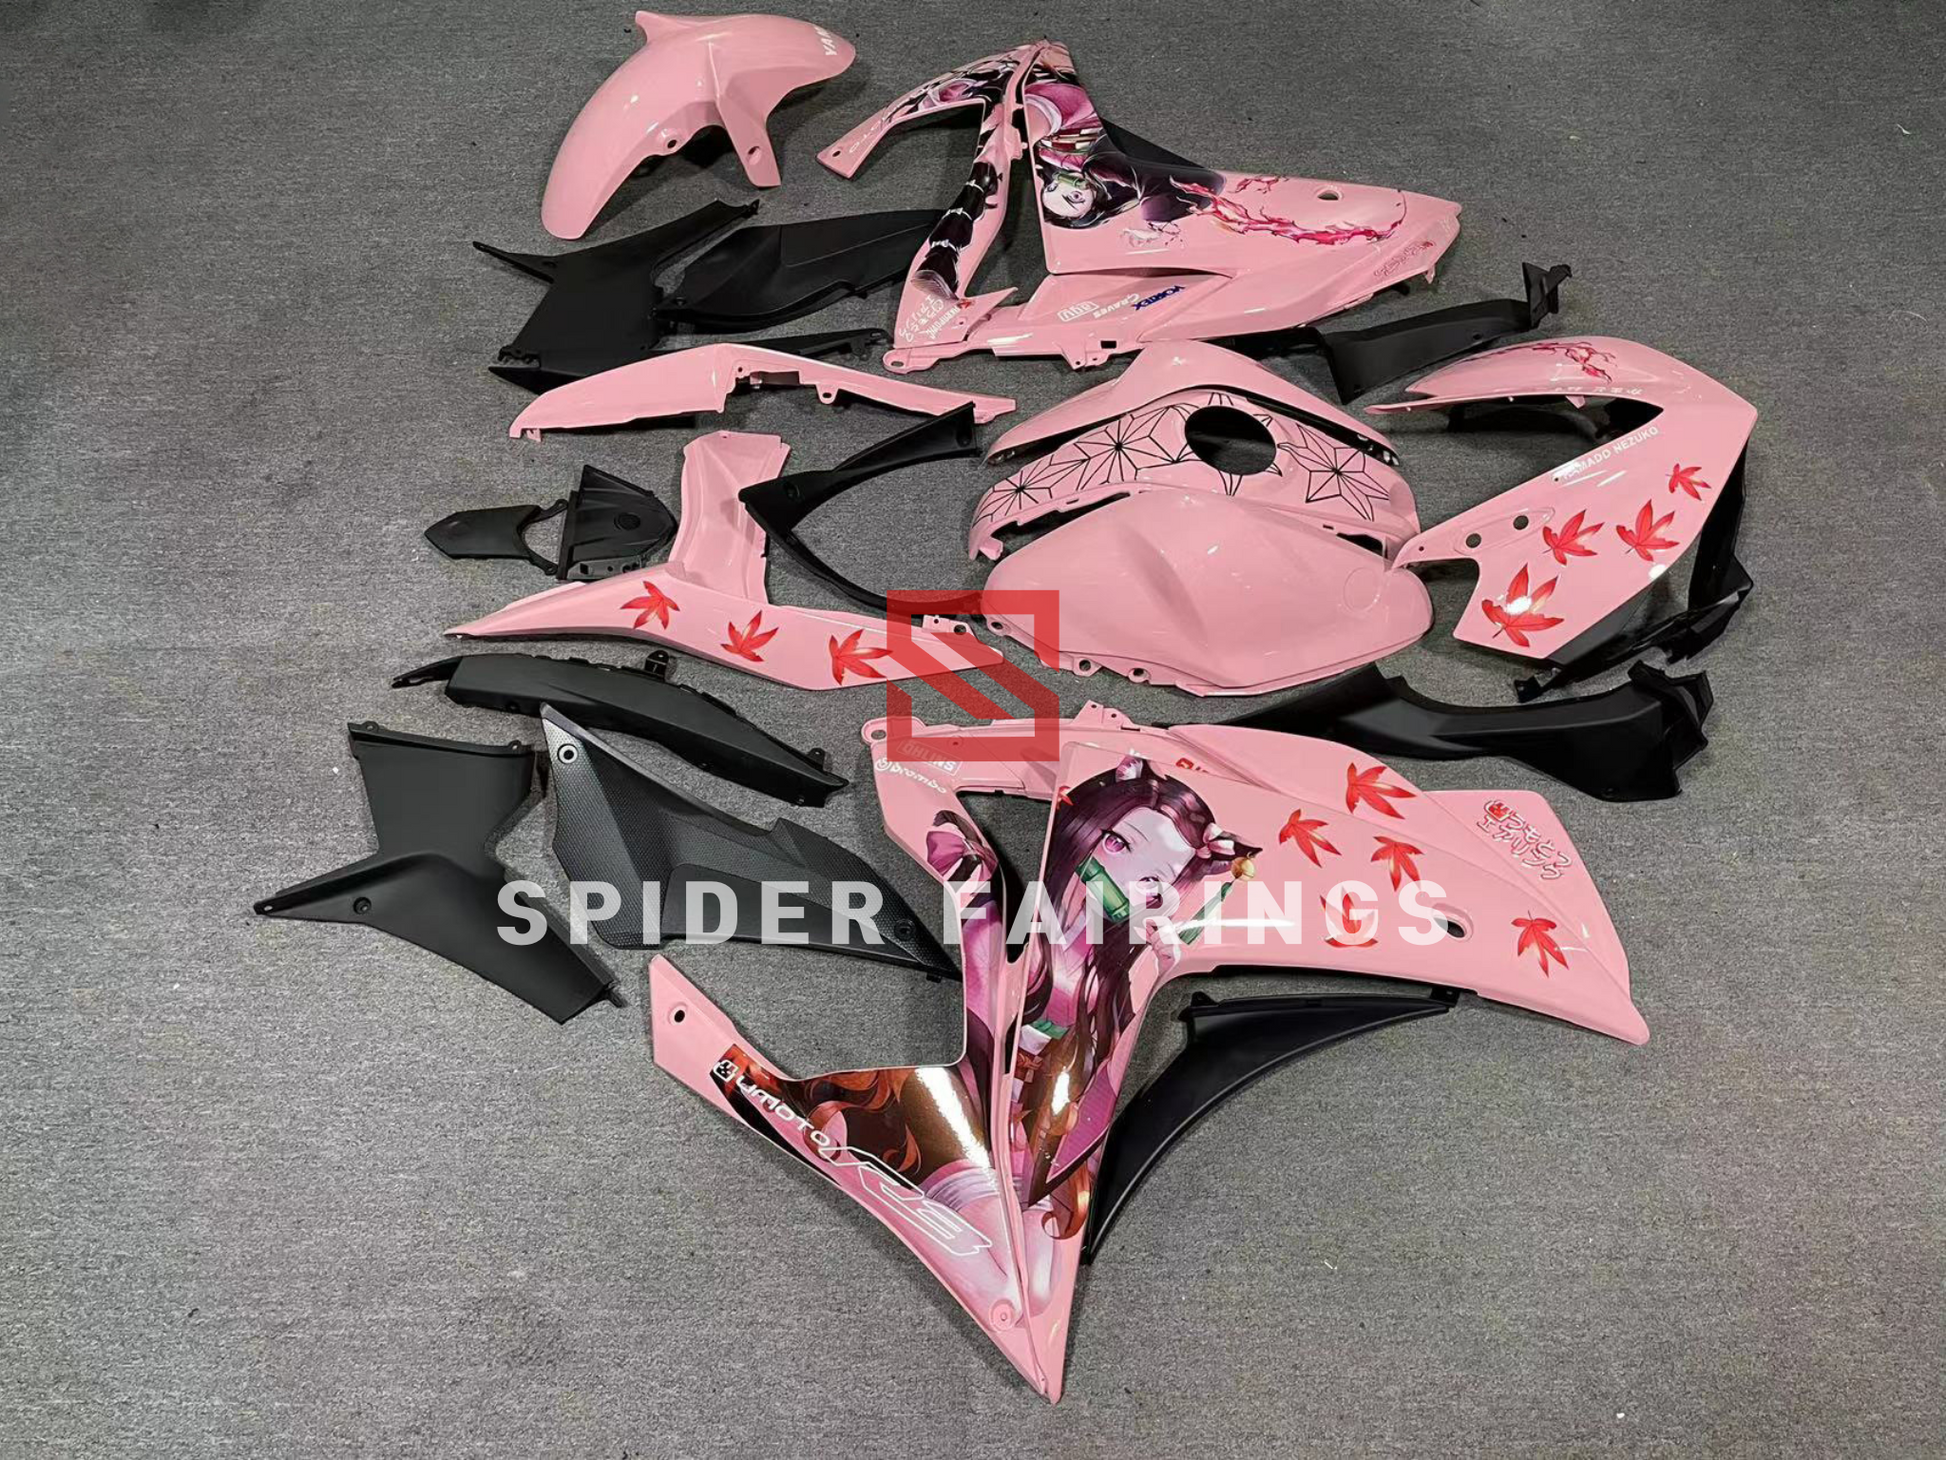 Demon Slayer for Pink-Yamaha Y-R25/R3 2014-2018